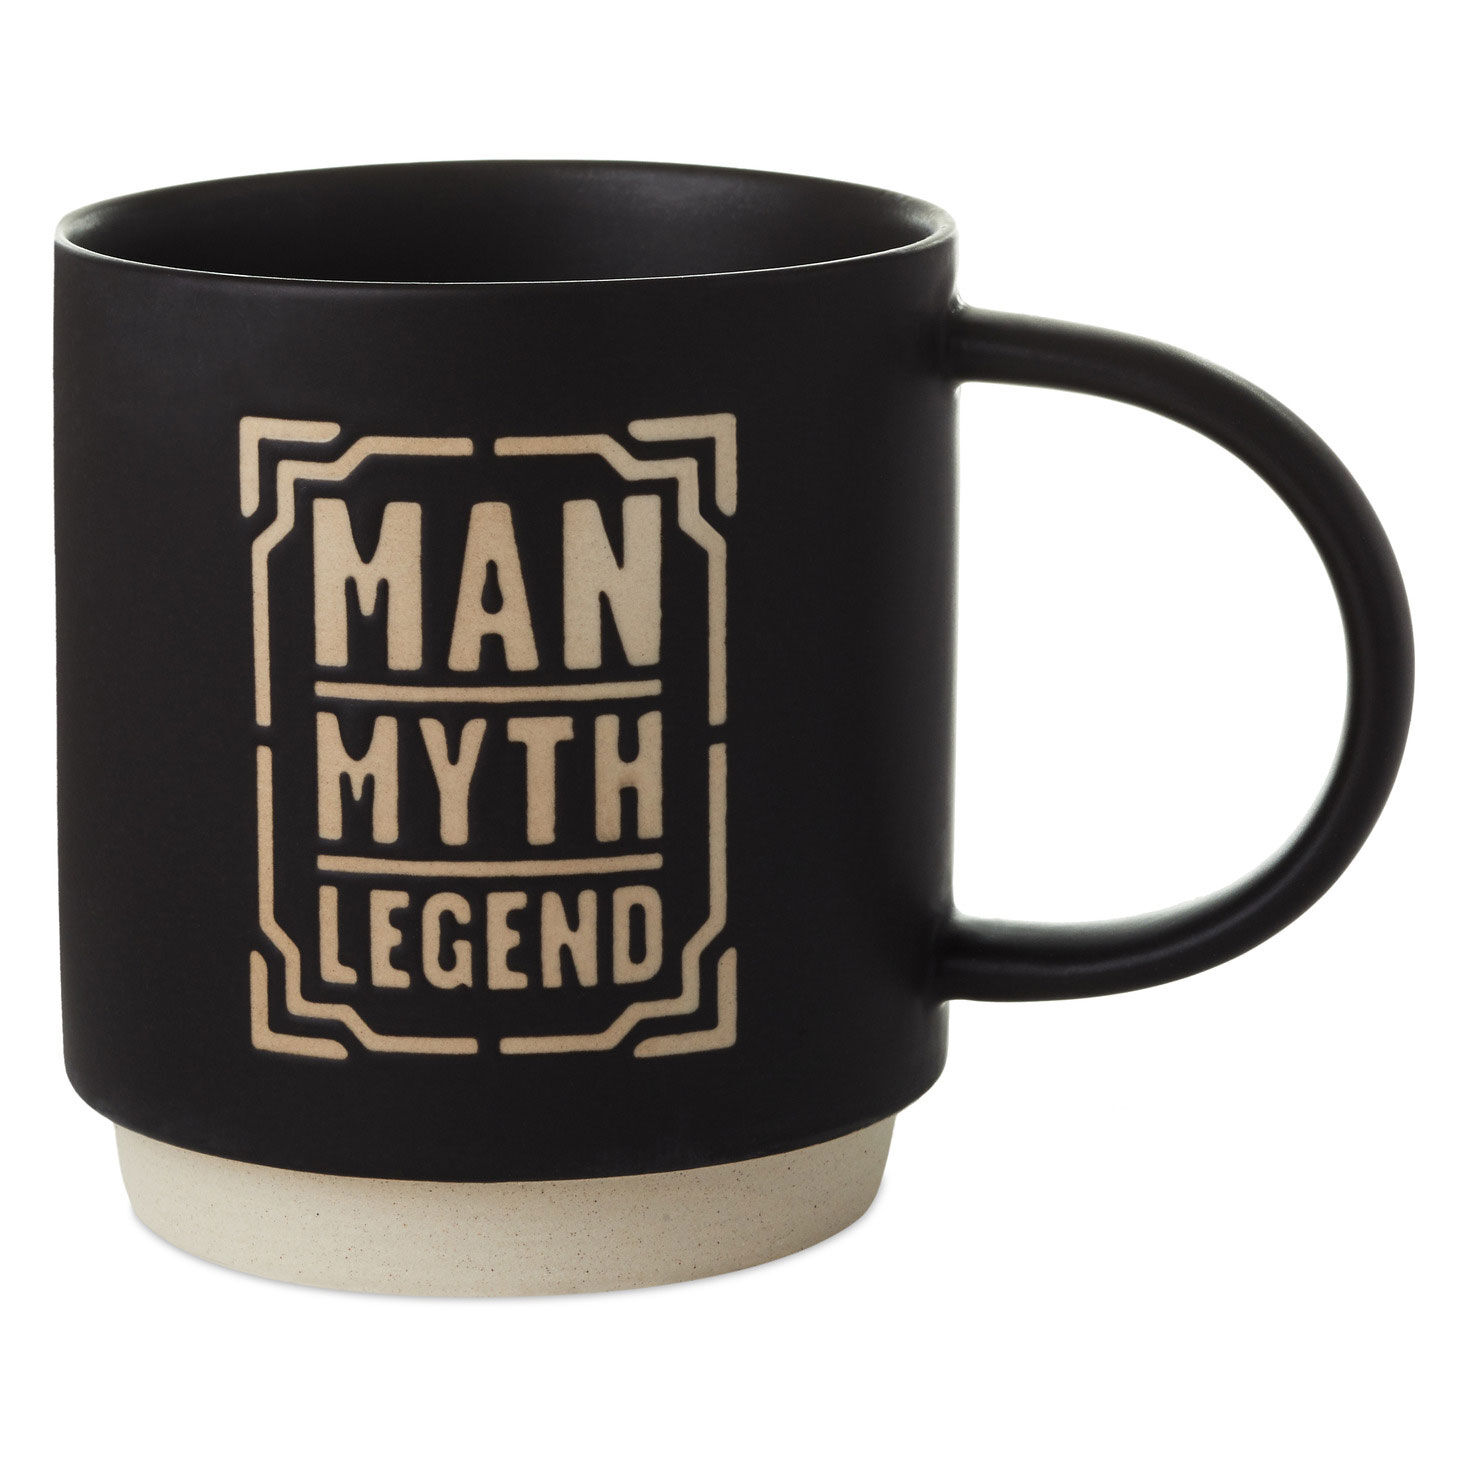 Legend Mom Grandma Since Year, Customized Coffee Mug, Personalized